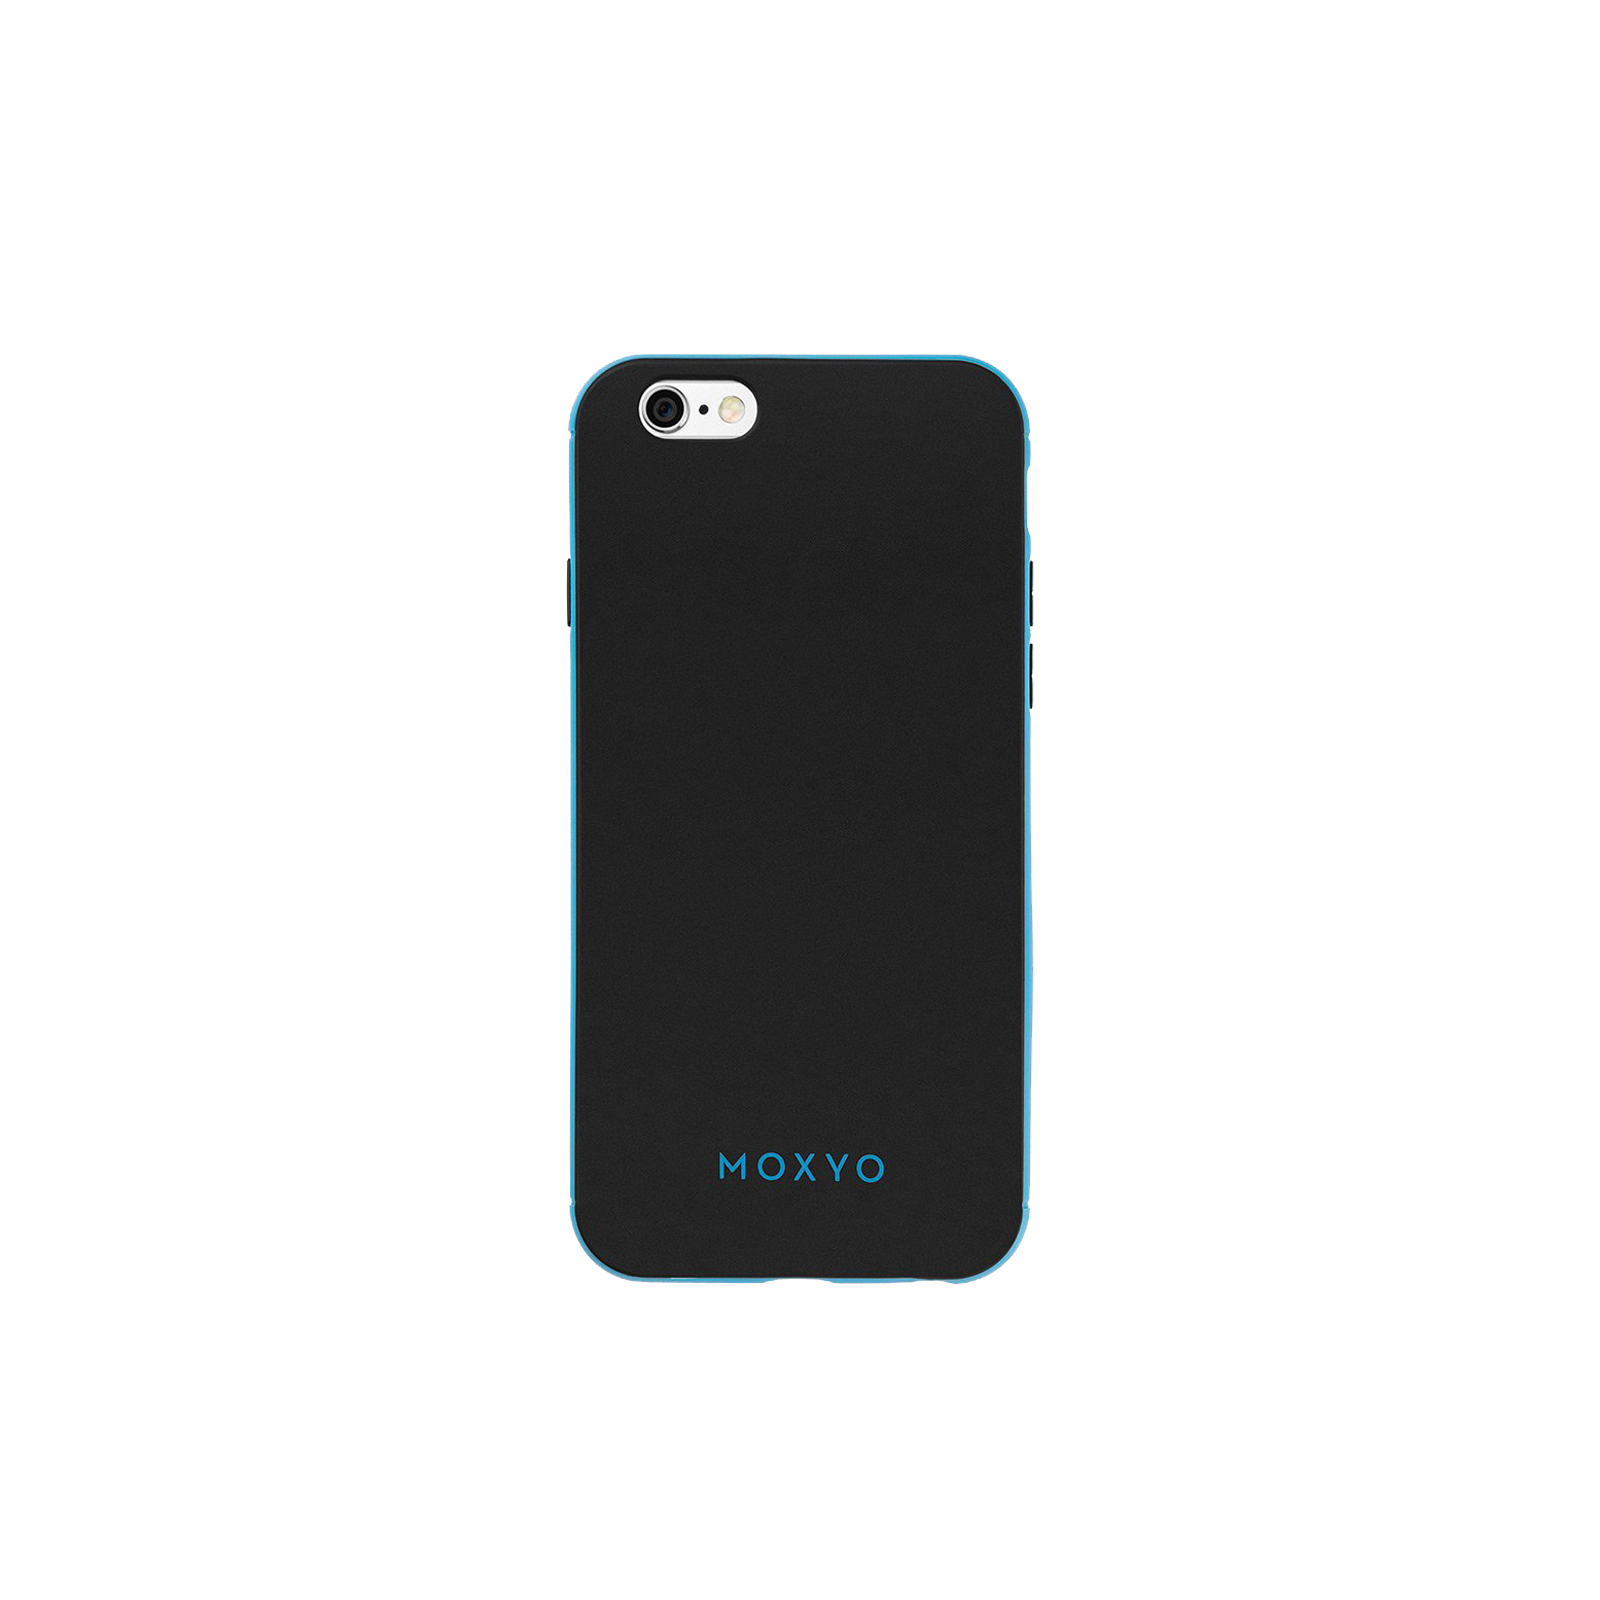 Moxyo Ginza Case iPhone 6/6s Black Case Brand New